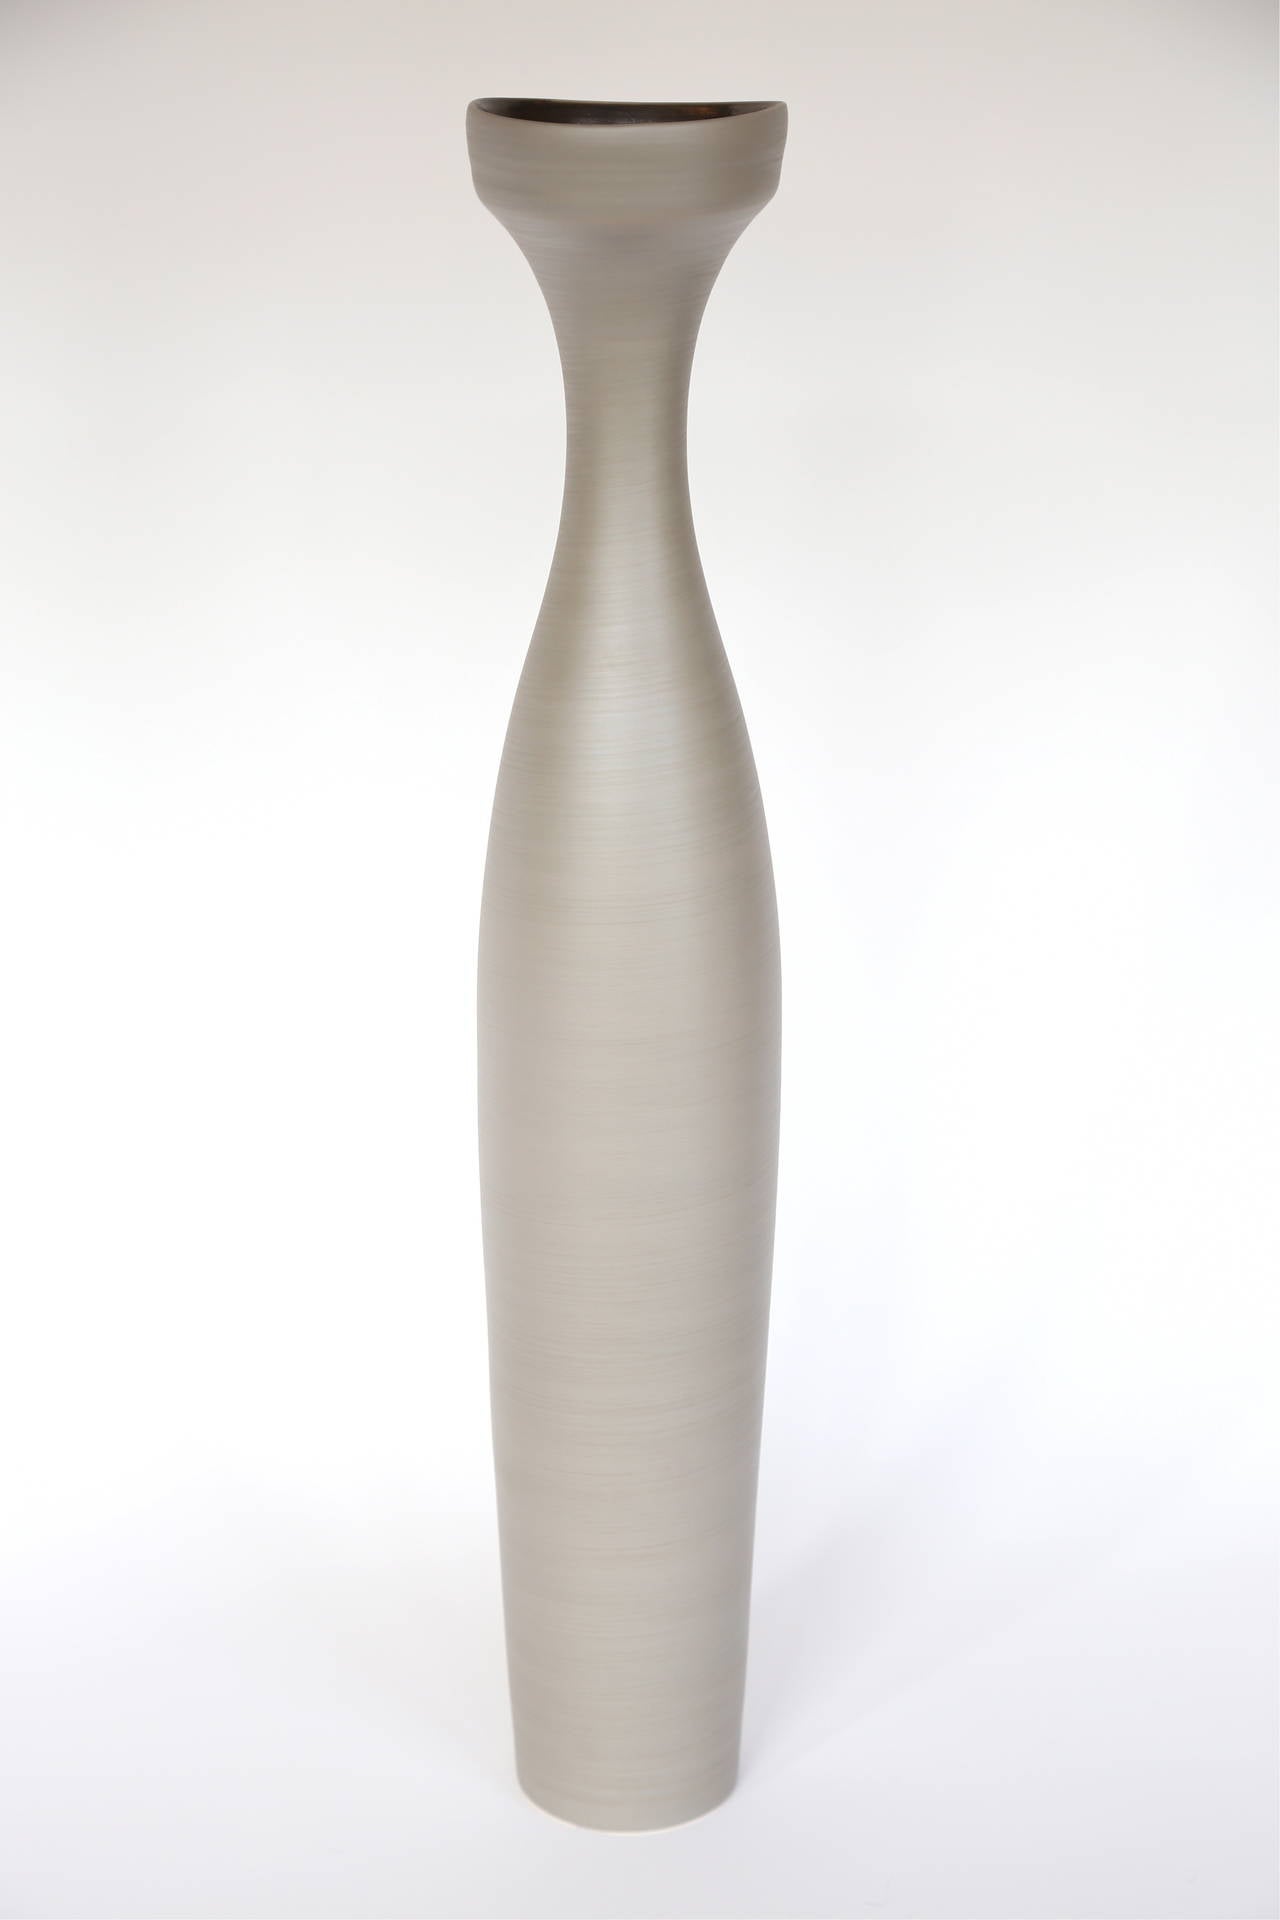 Rina Menardi Handmade Ceramic Angel Vases in Linen, Dark Bronze and Light Brown In New Condition For Sale In Los Angeles, CA